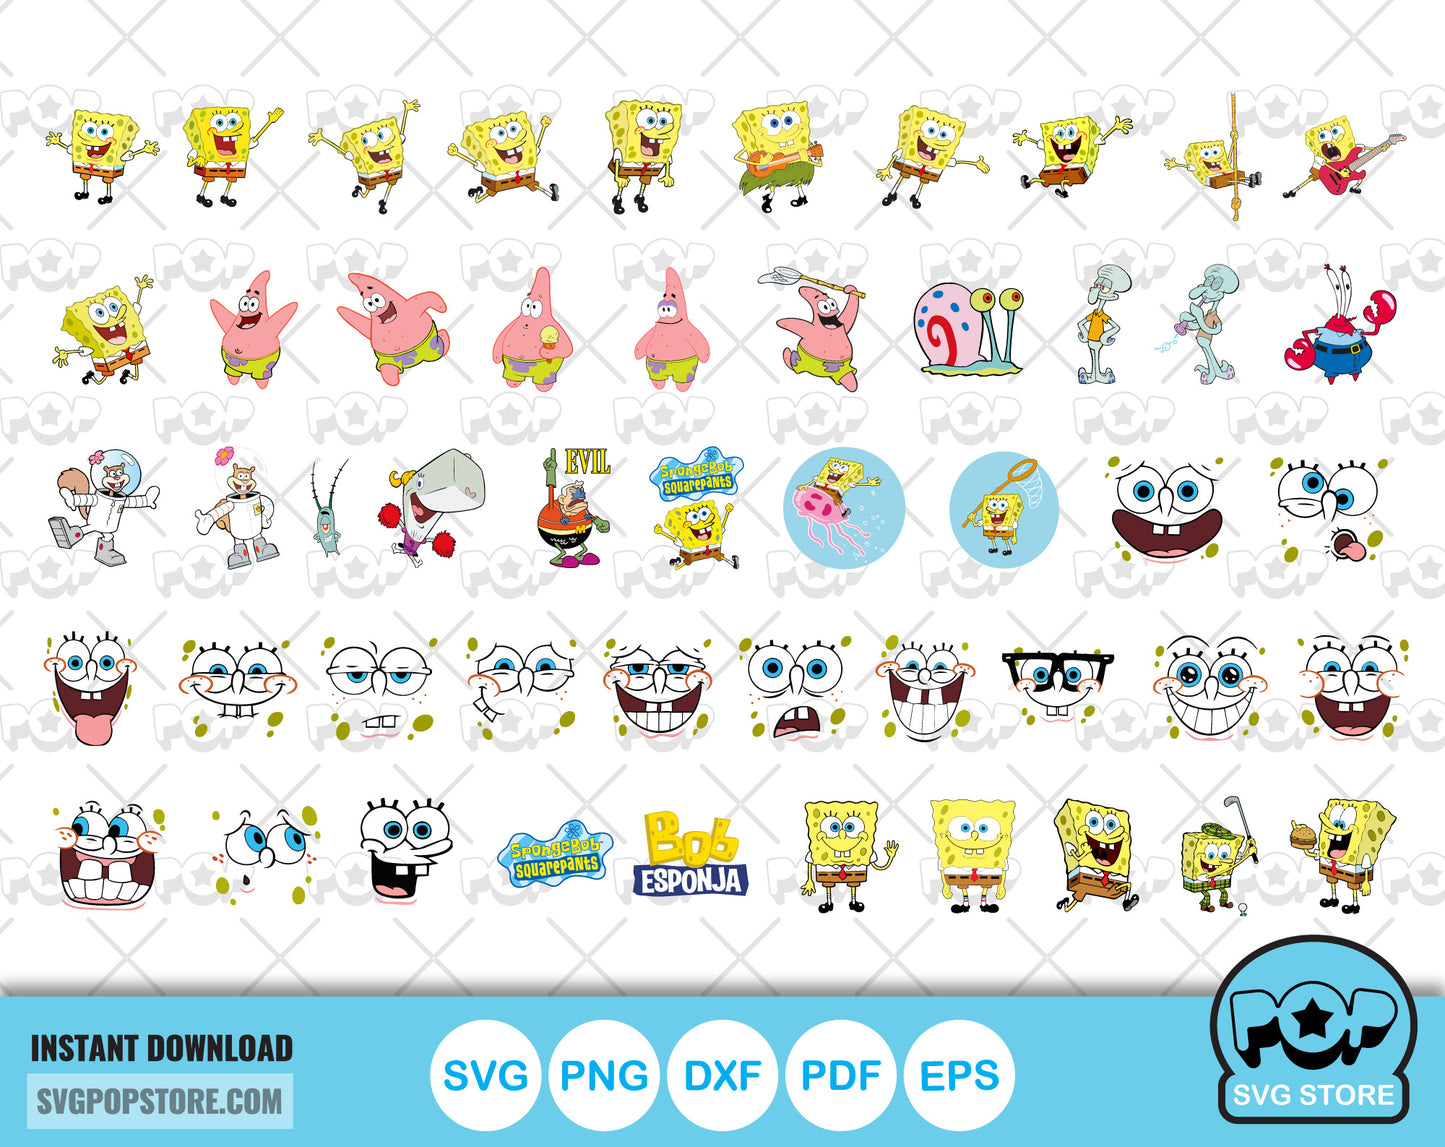 Spongebob Squarepants 100 cliparts bundle, SpongeBob svg cut files for Cricut / Silhouette, Spongebob png